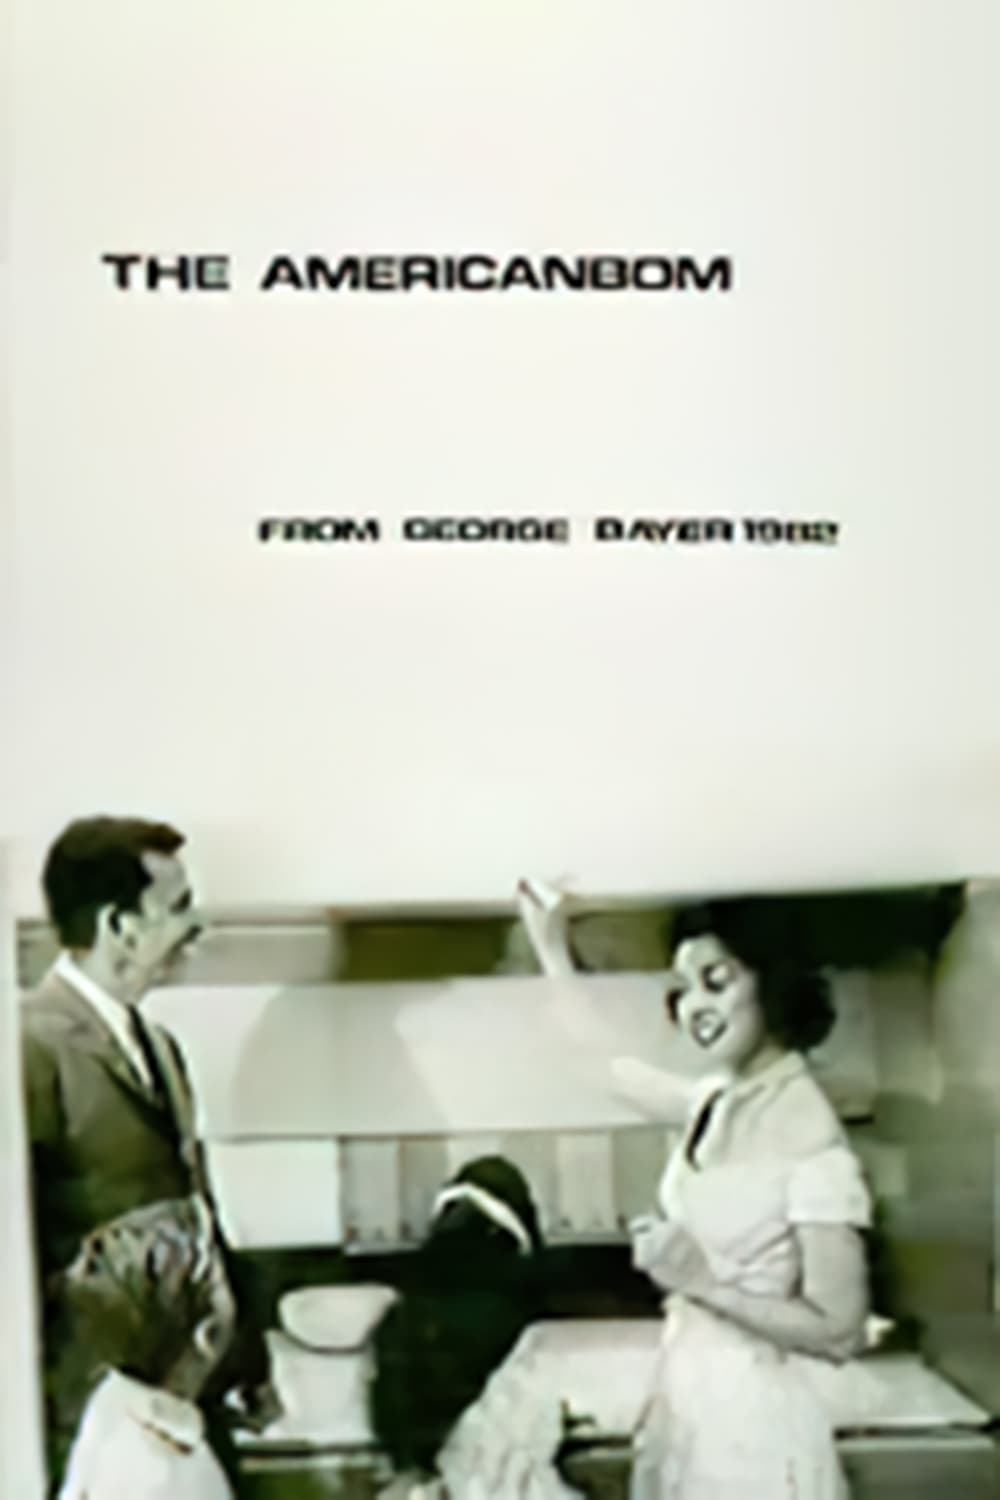 The Americanbom